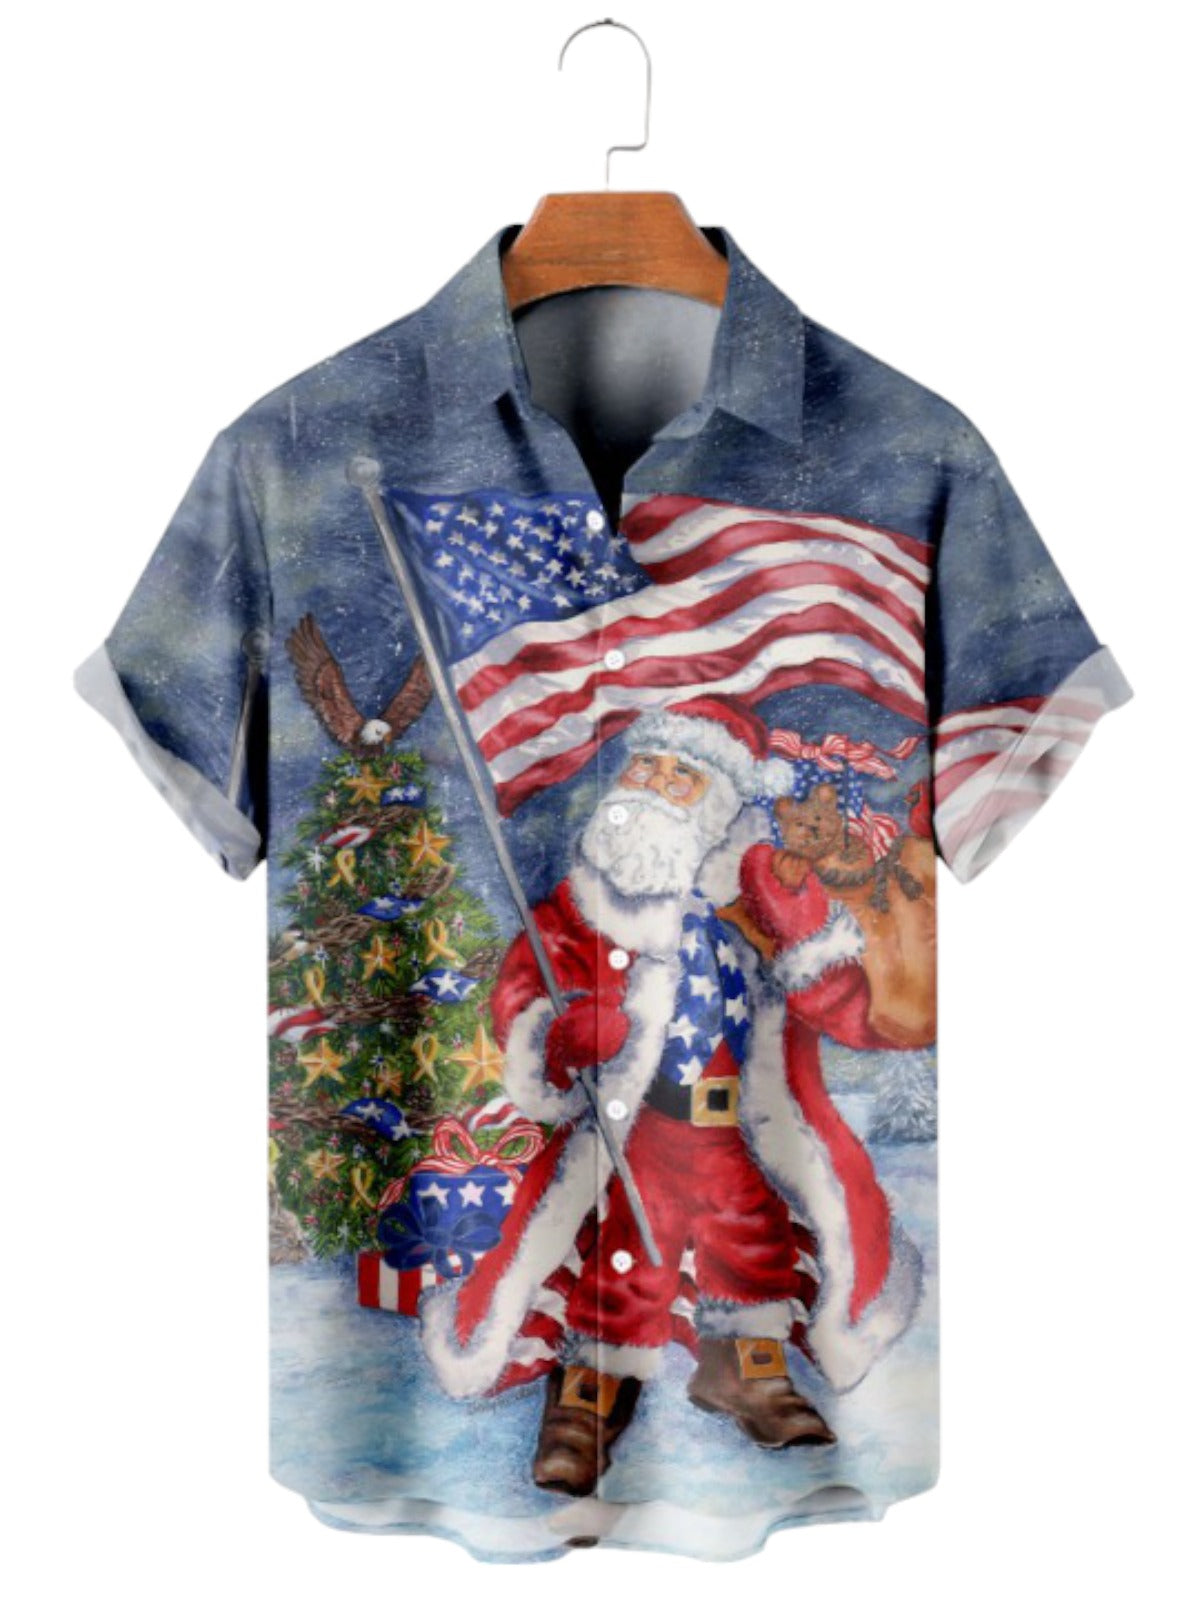 Santa Claus Holding American Flag Print Shirt